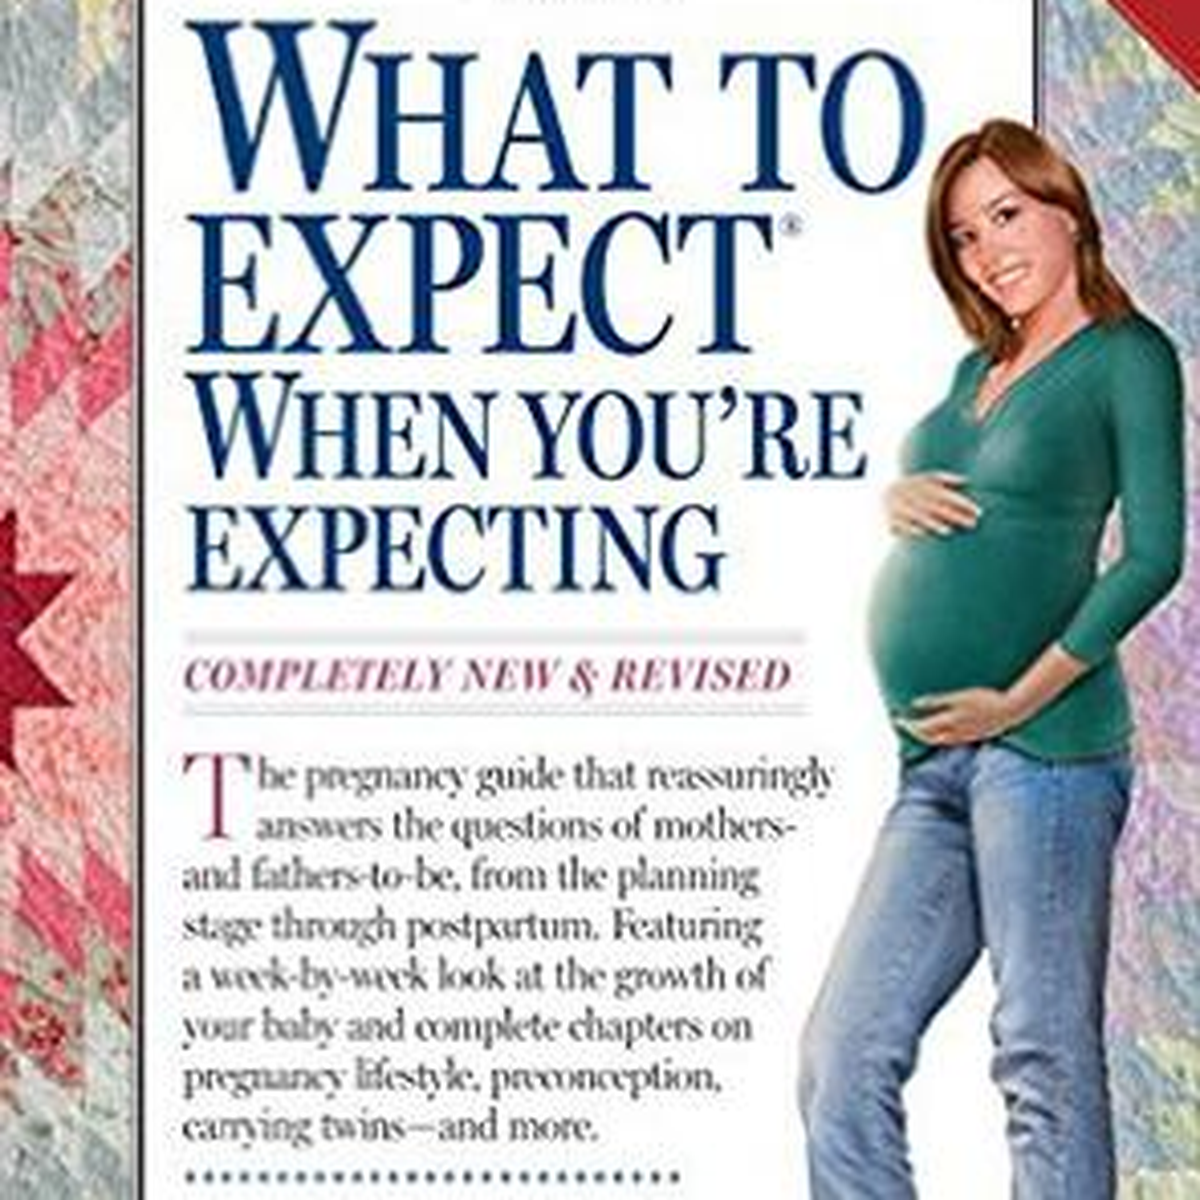 What to expect when you're expecting книга. Книги для беременных. Книги Хейди Муркофф. Book for pregnant. Рассказ про беременных